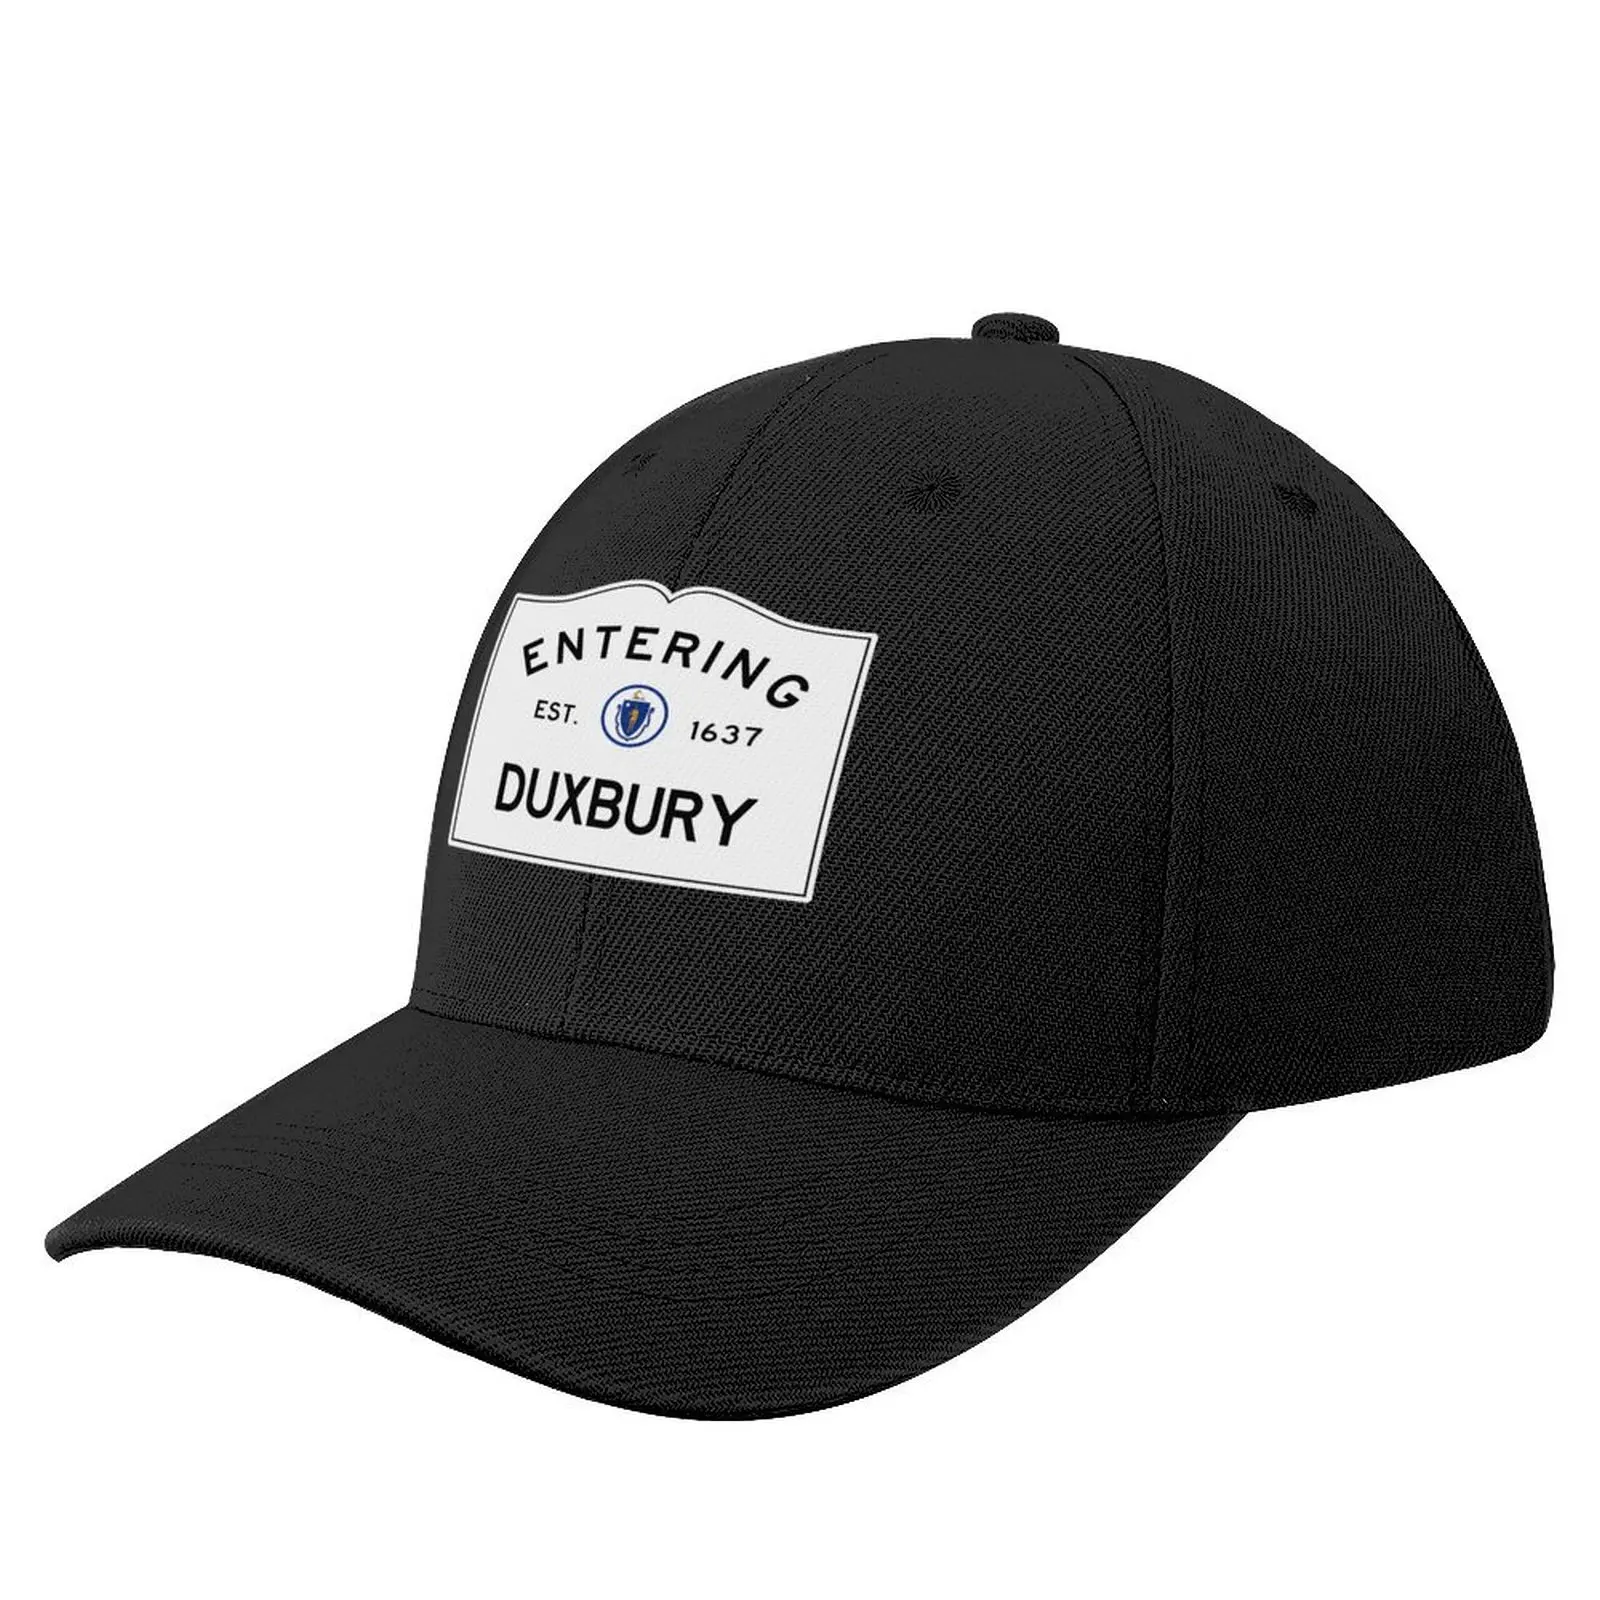 

Entering Duxbury Road Sign - Duxbury, Massachusetts Baseball Cap New Hat Hood Golf Hat Man Baseball For Men Women's